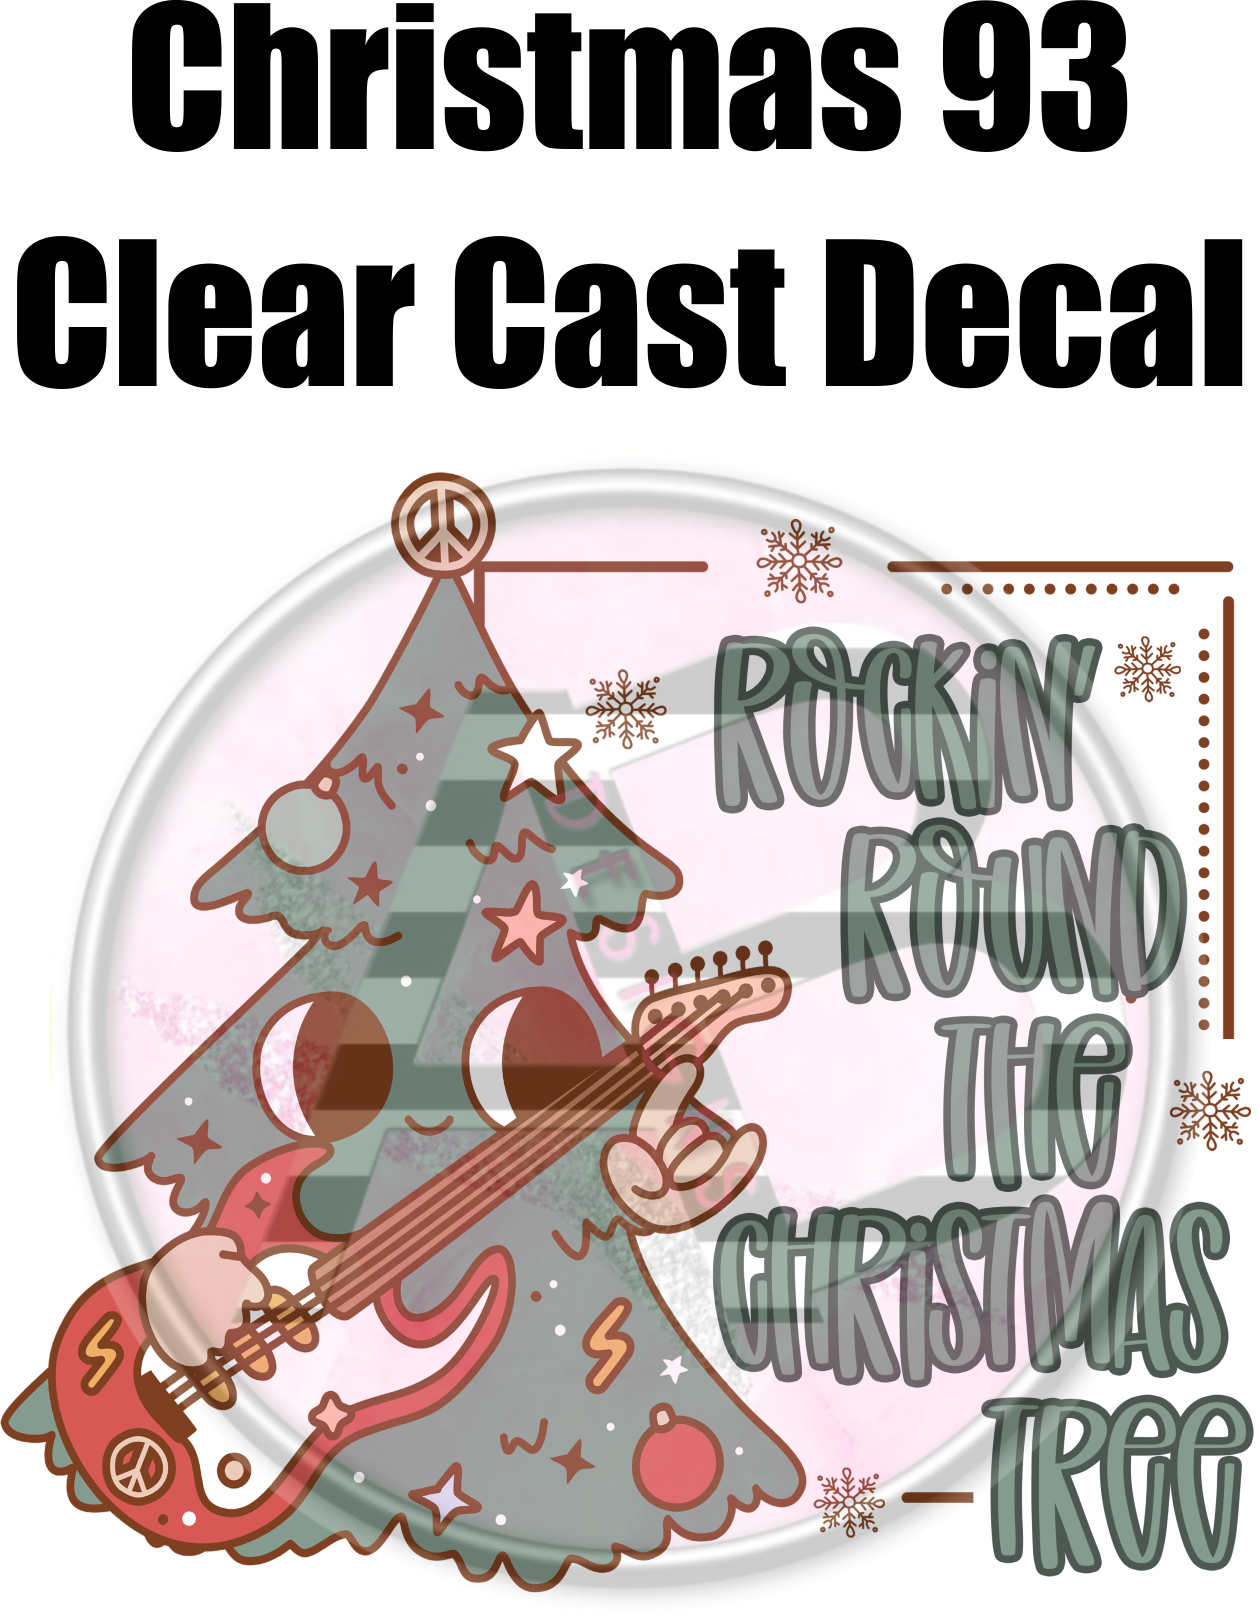 Christmas 93 - Clear Cast Decal